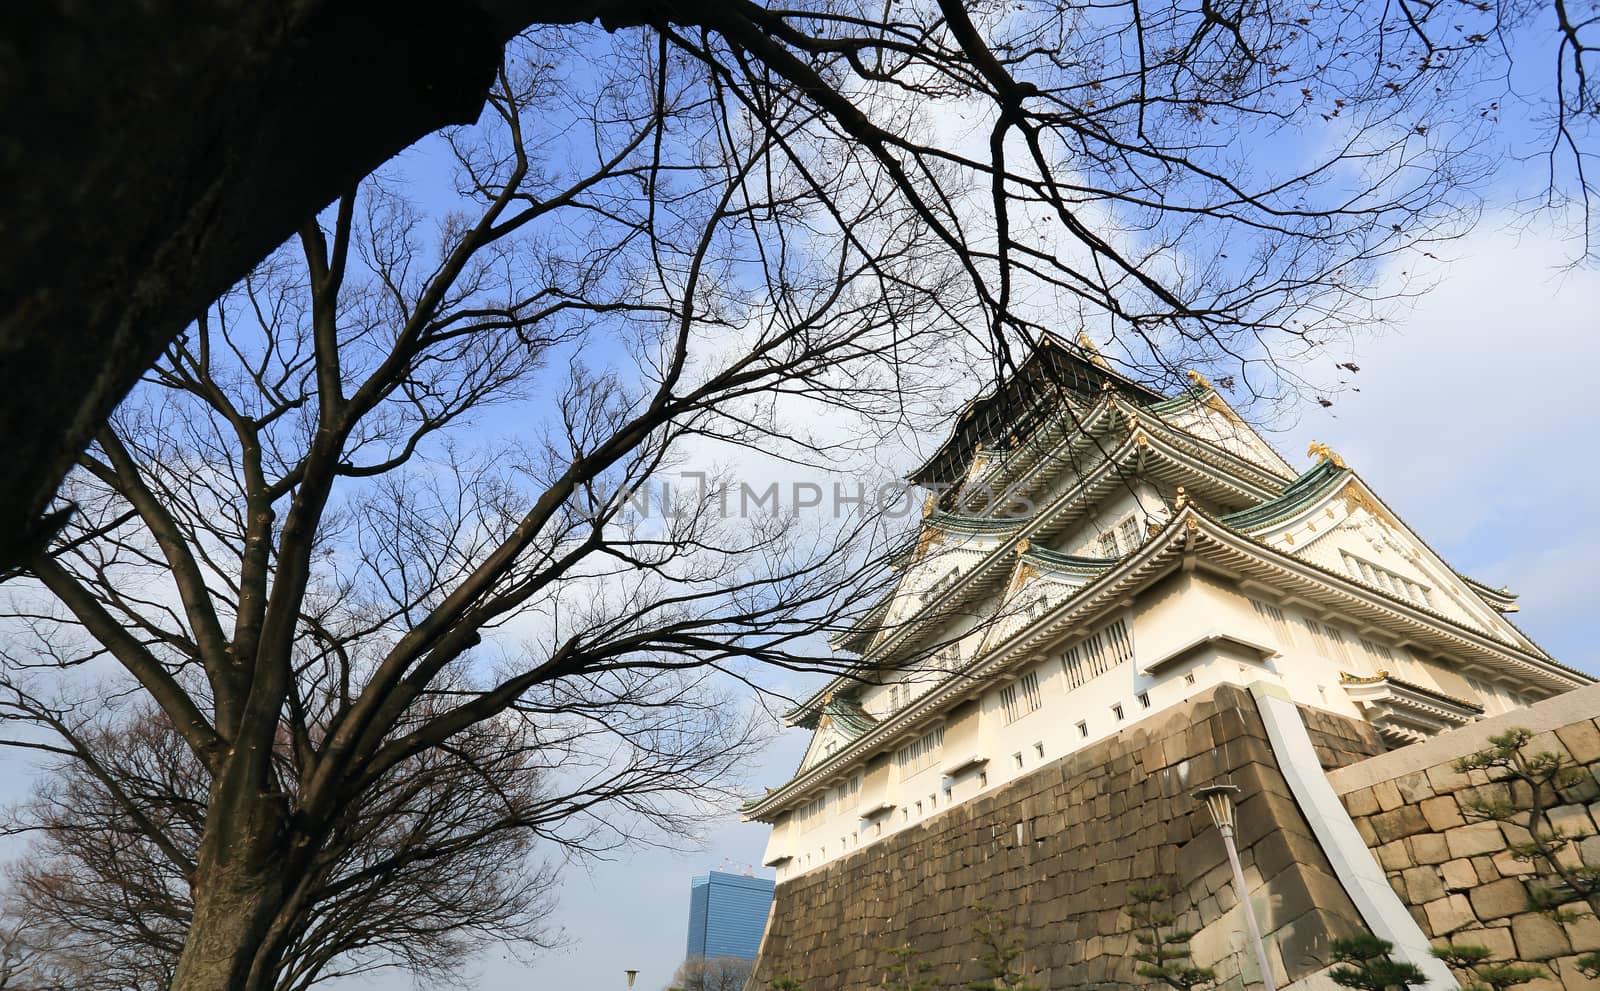 Osaka Castle in Osaka, Japan by rufous